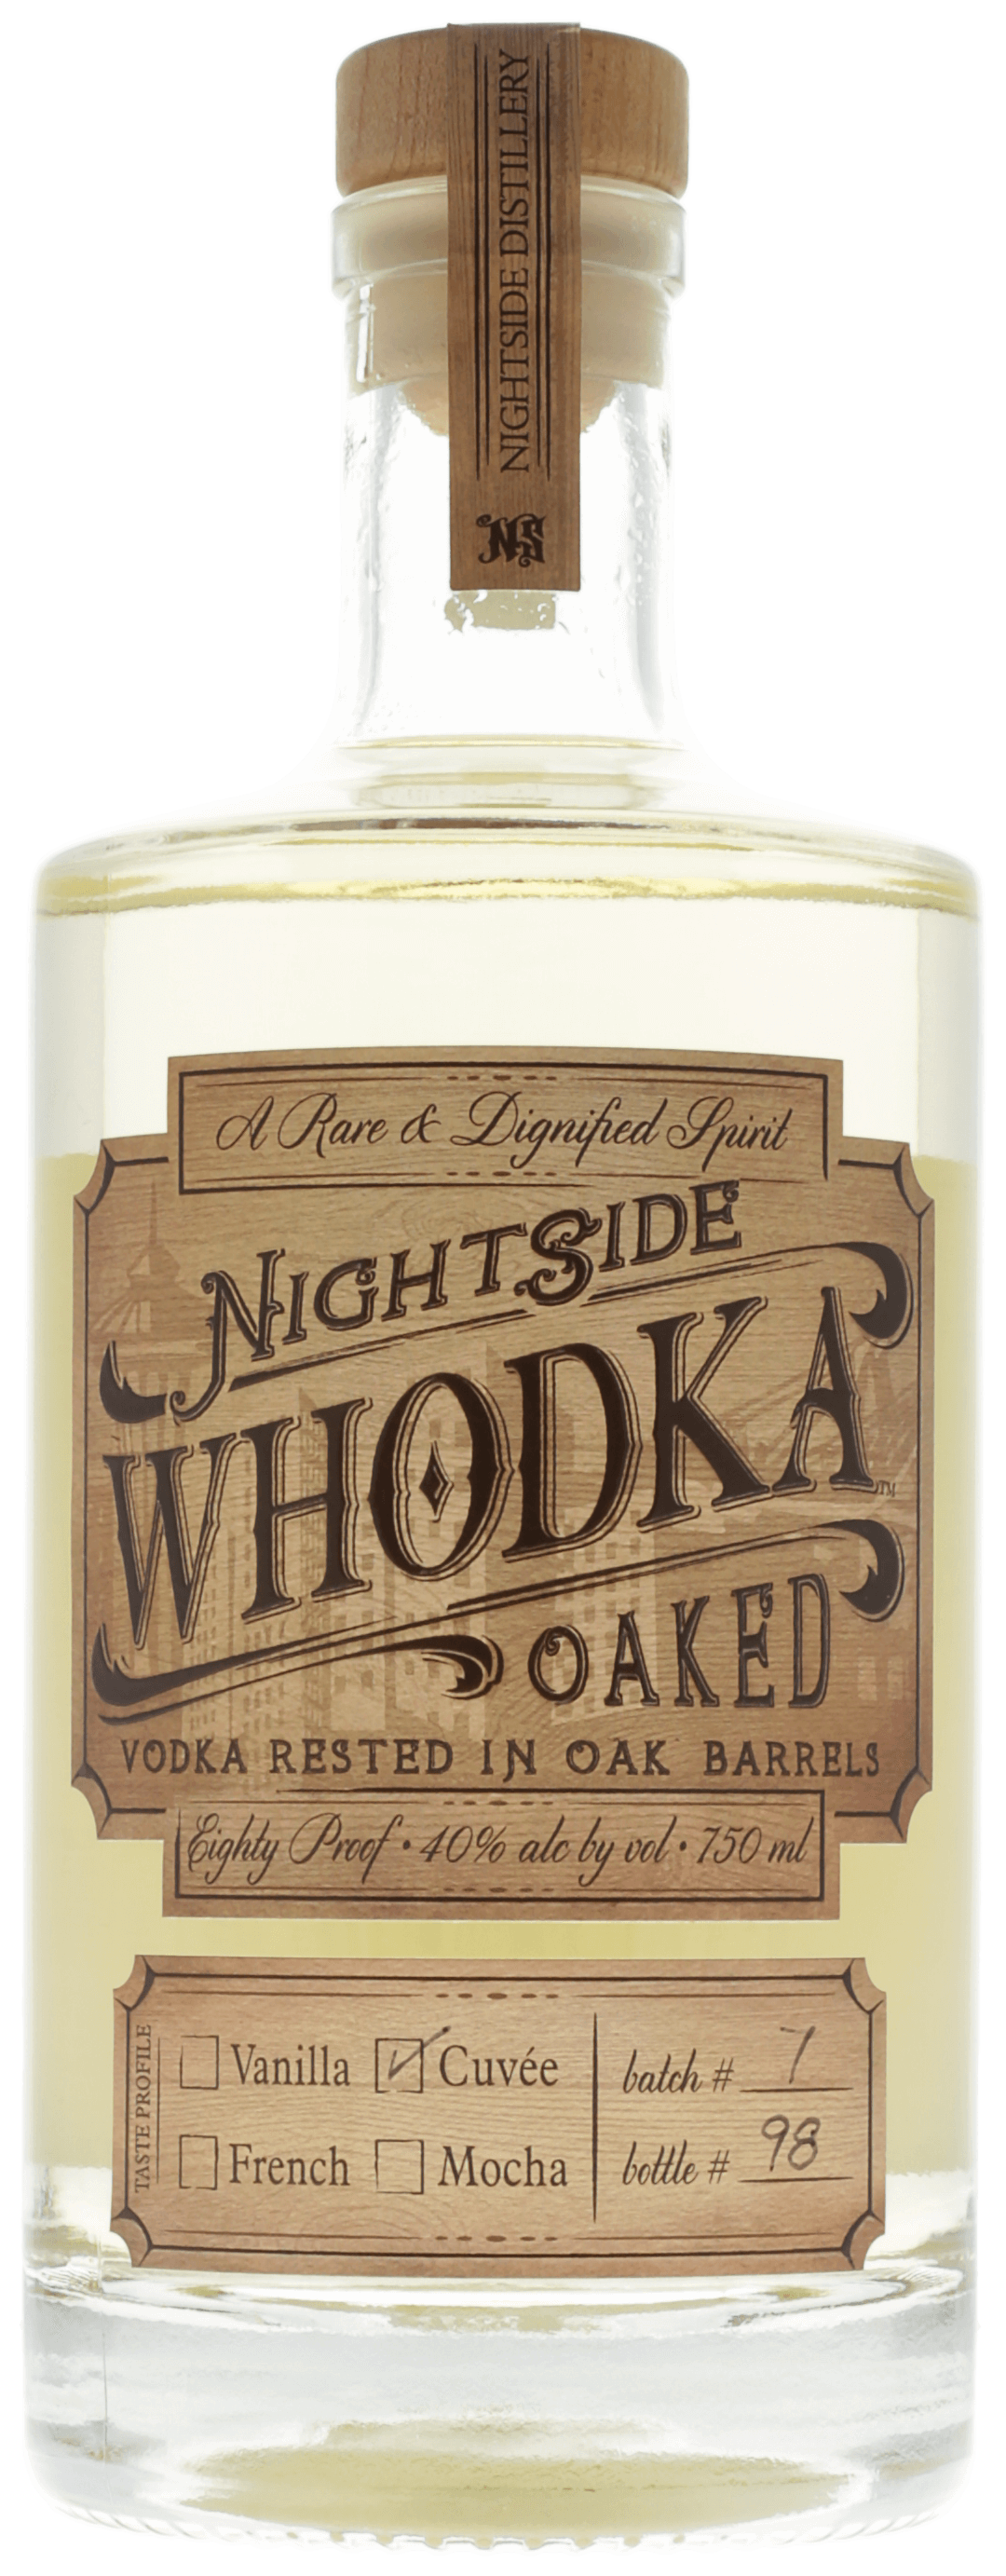 Nightside Whodka